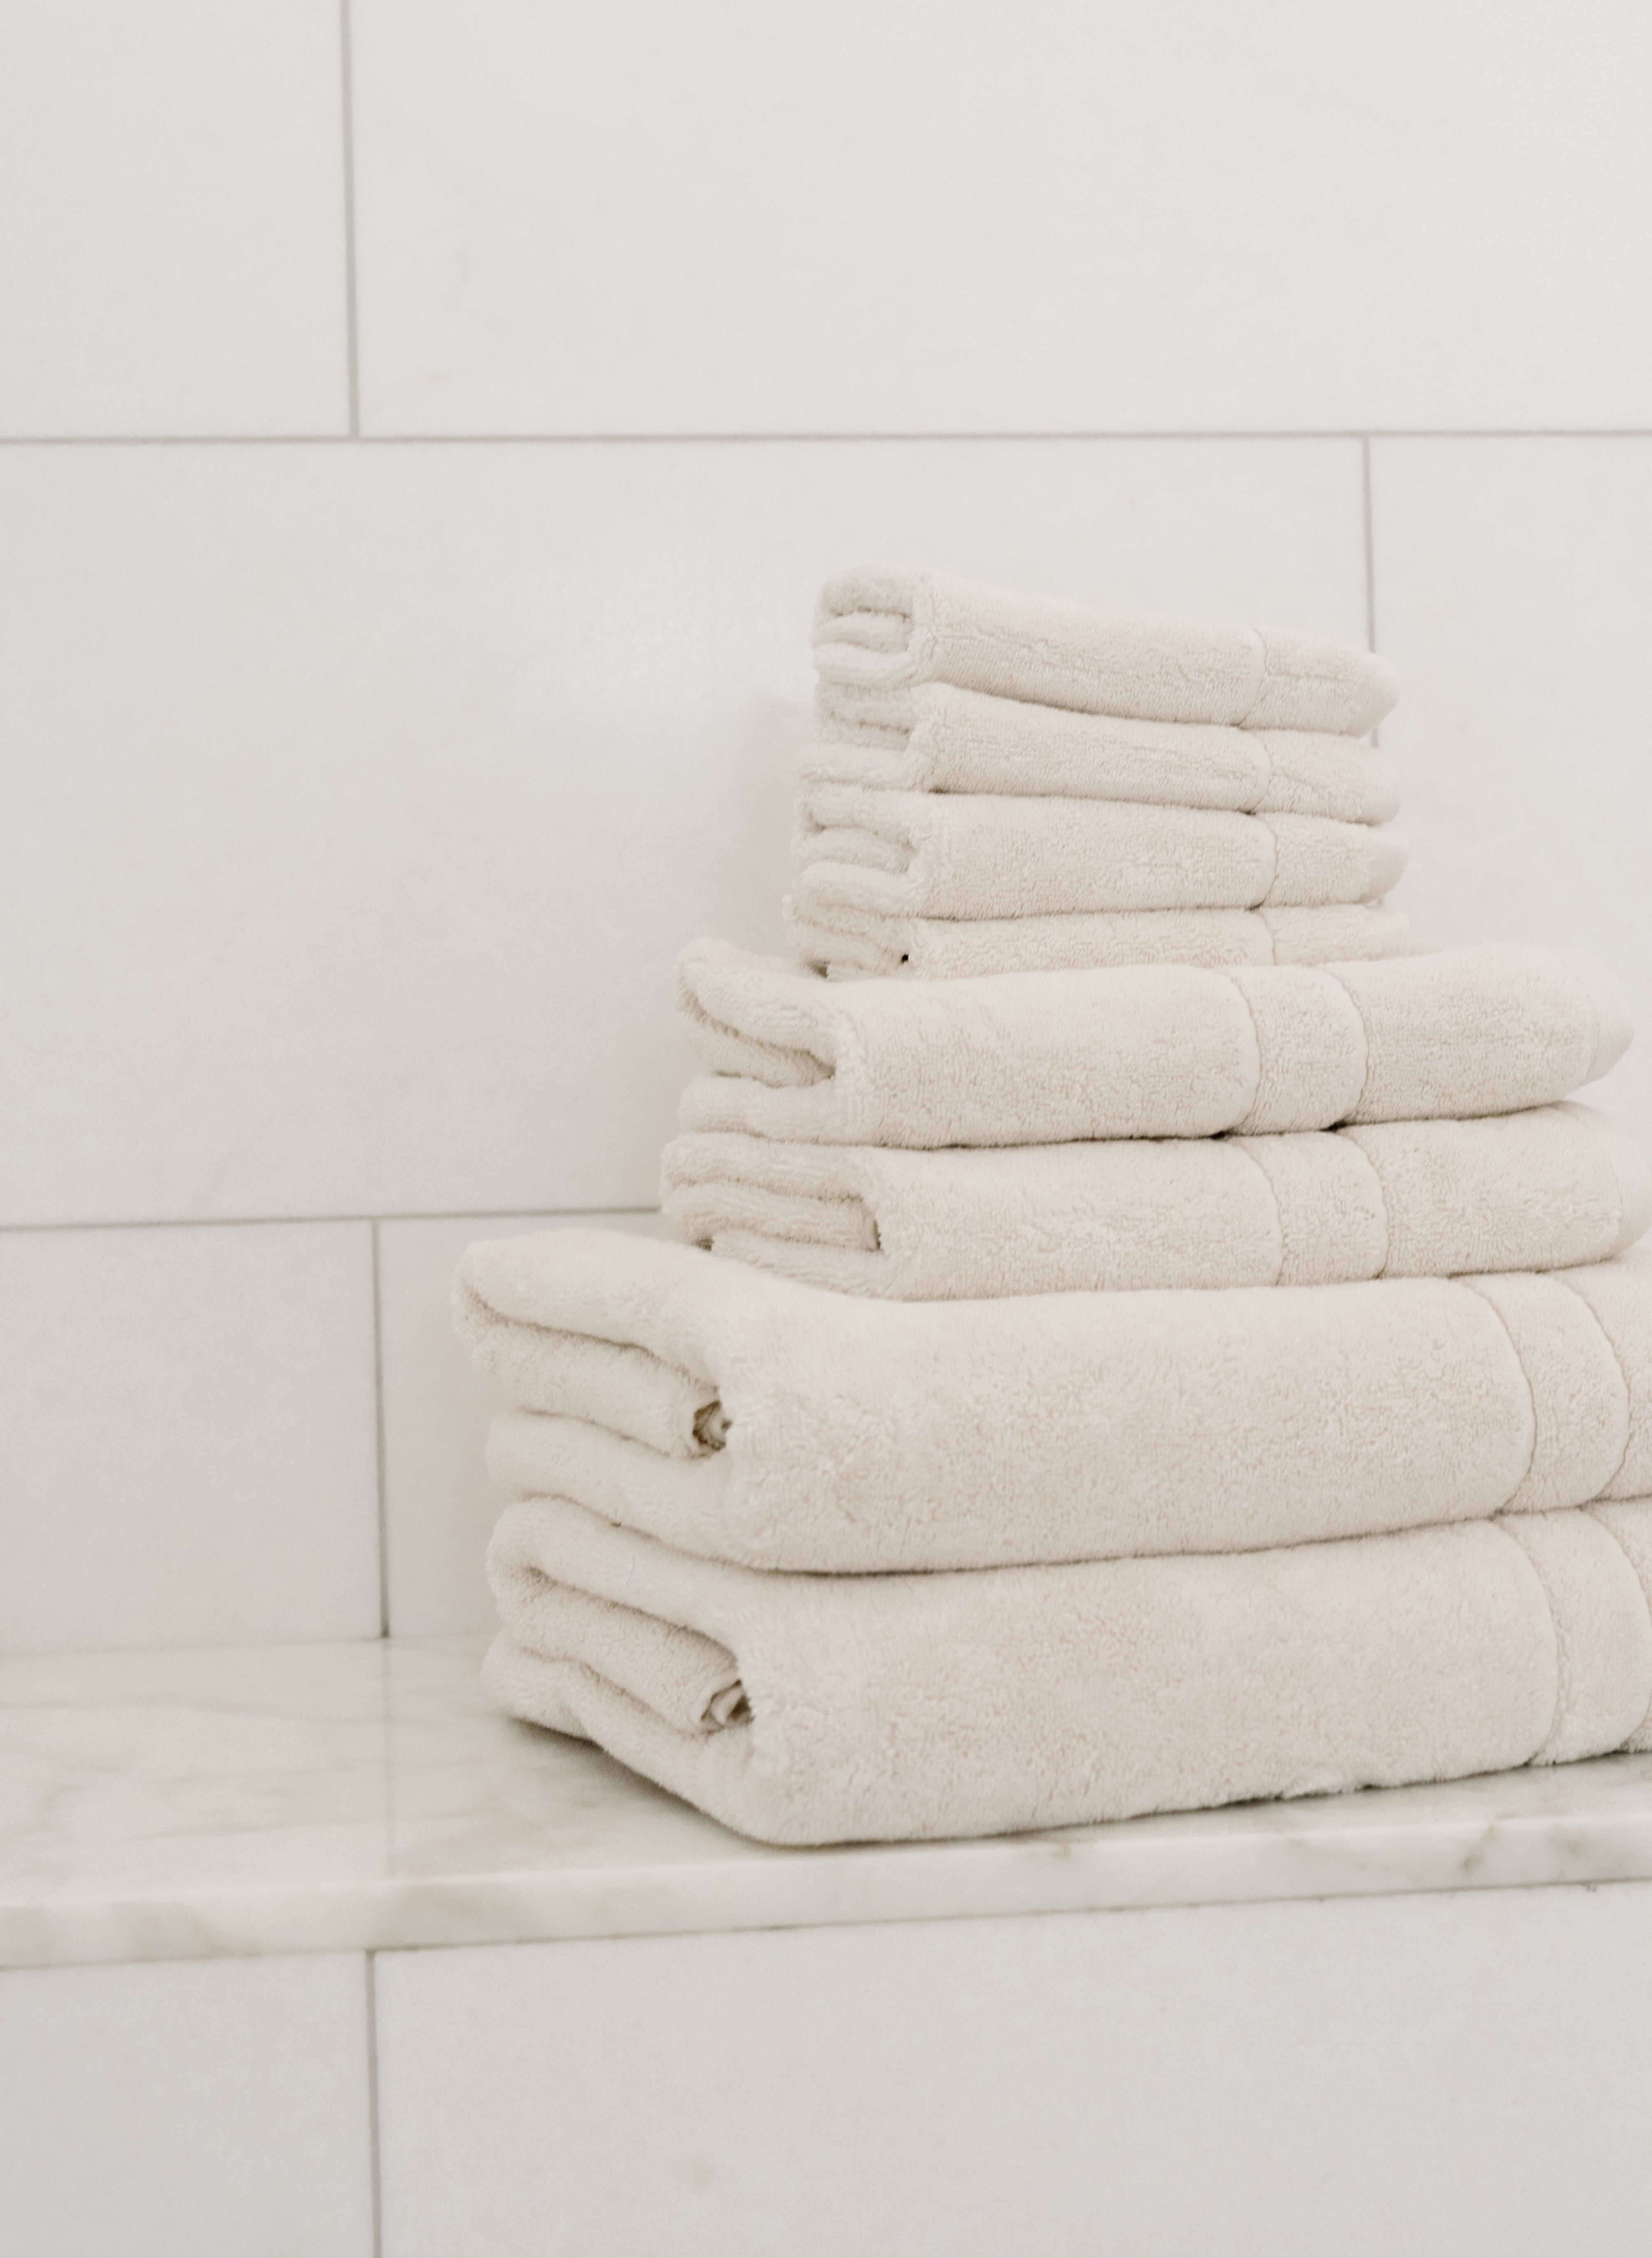 Premium Plush Bath Towel Set in the color Seashell. Photo of Seashell Premium Plush Bath Towel Set taken in a bathroom featuring white backsplash tile |Color:Seashell